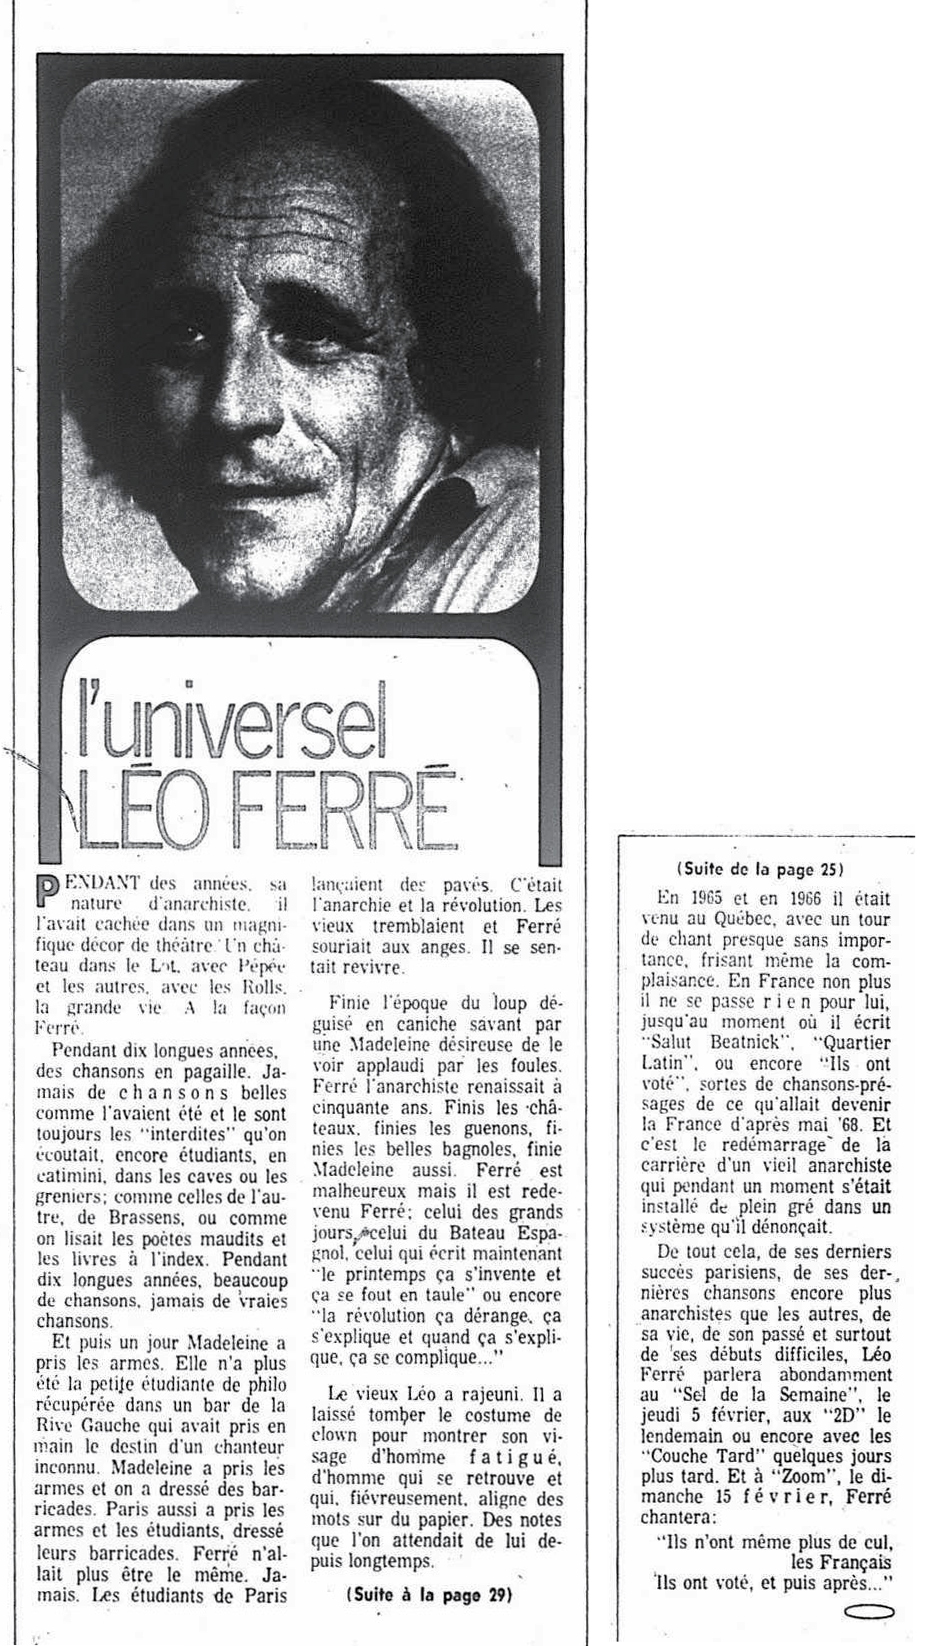 Léo Ferré - La presse, Télé-presse, samedi 7 février 1970